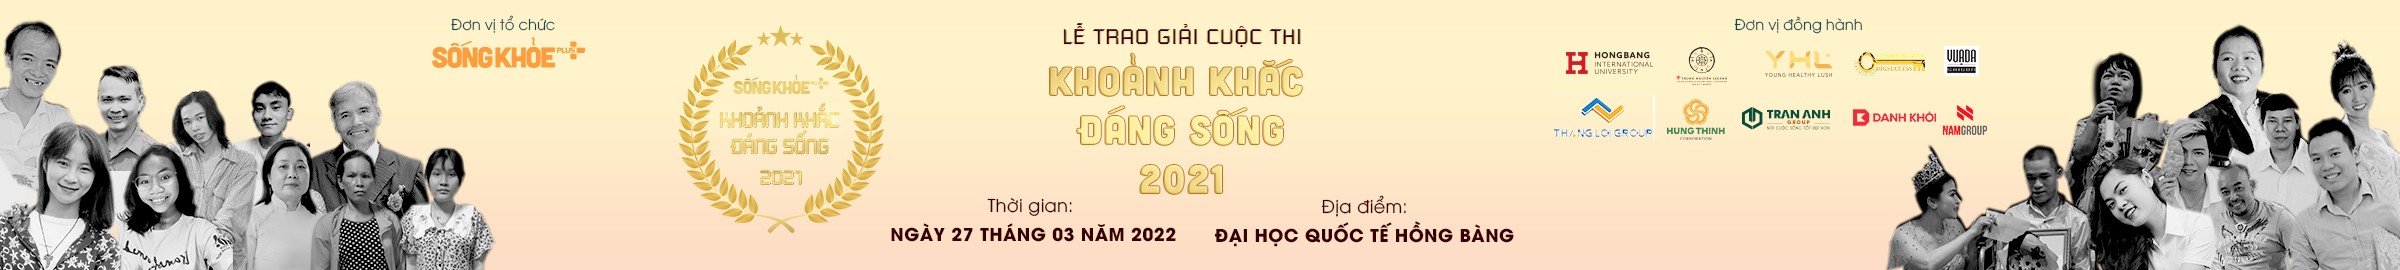 TRAO GIAI CUOC THI KHOANG KHAC DANG SONG NAM 2021